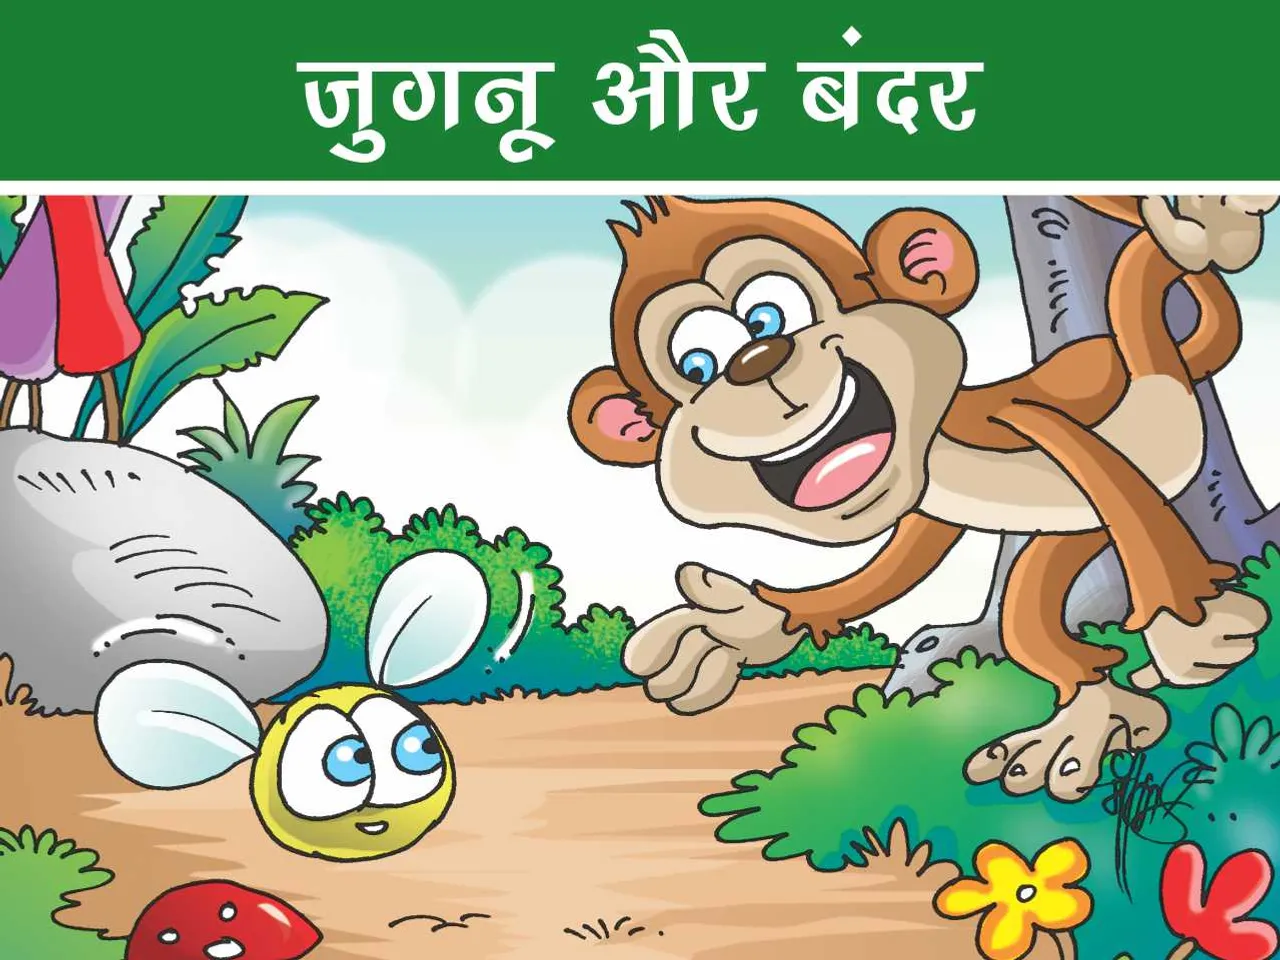 Firefly and monkey cartoon image